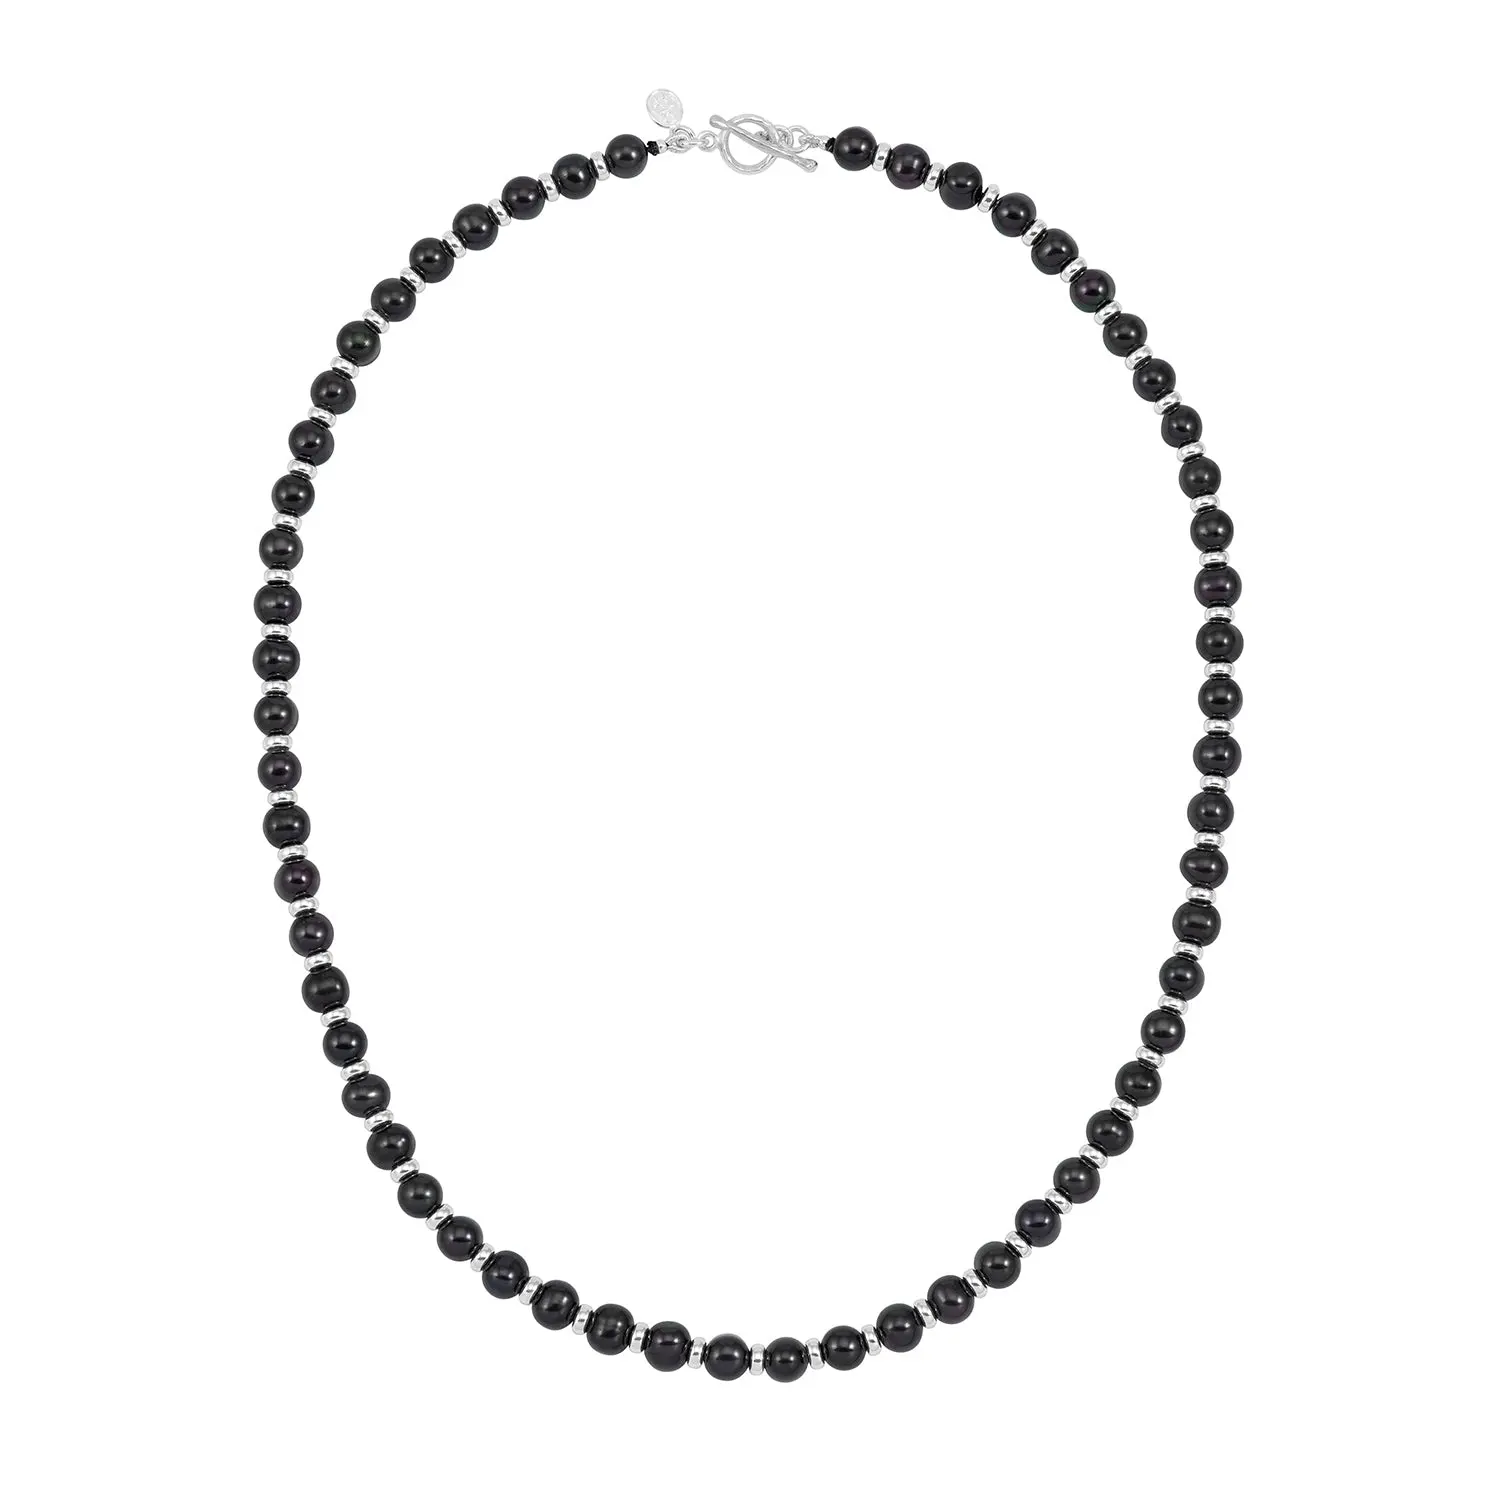 Gemnel custom jewelry Men's Turquoise & Halo Bead Black Pearl Halo Necklace